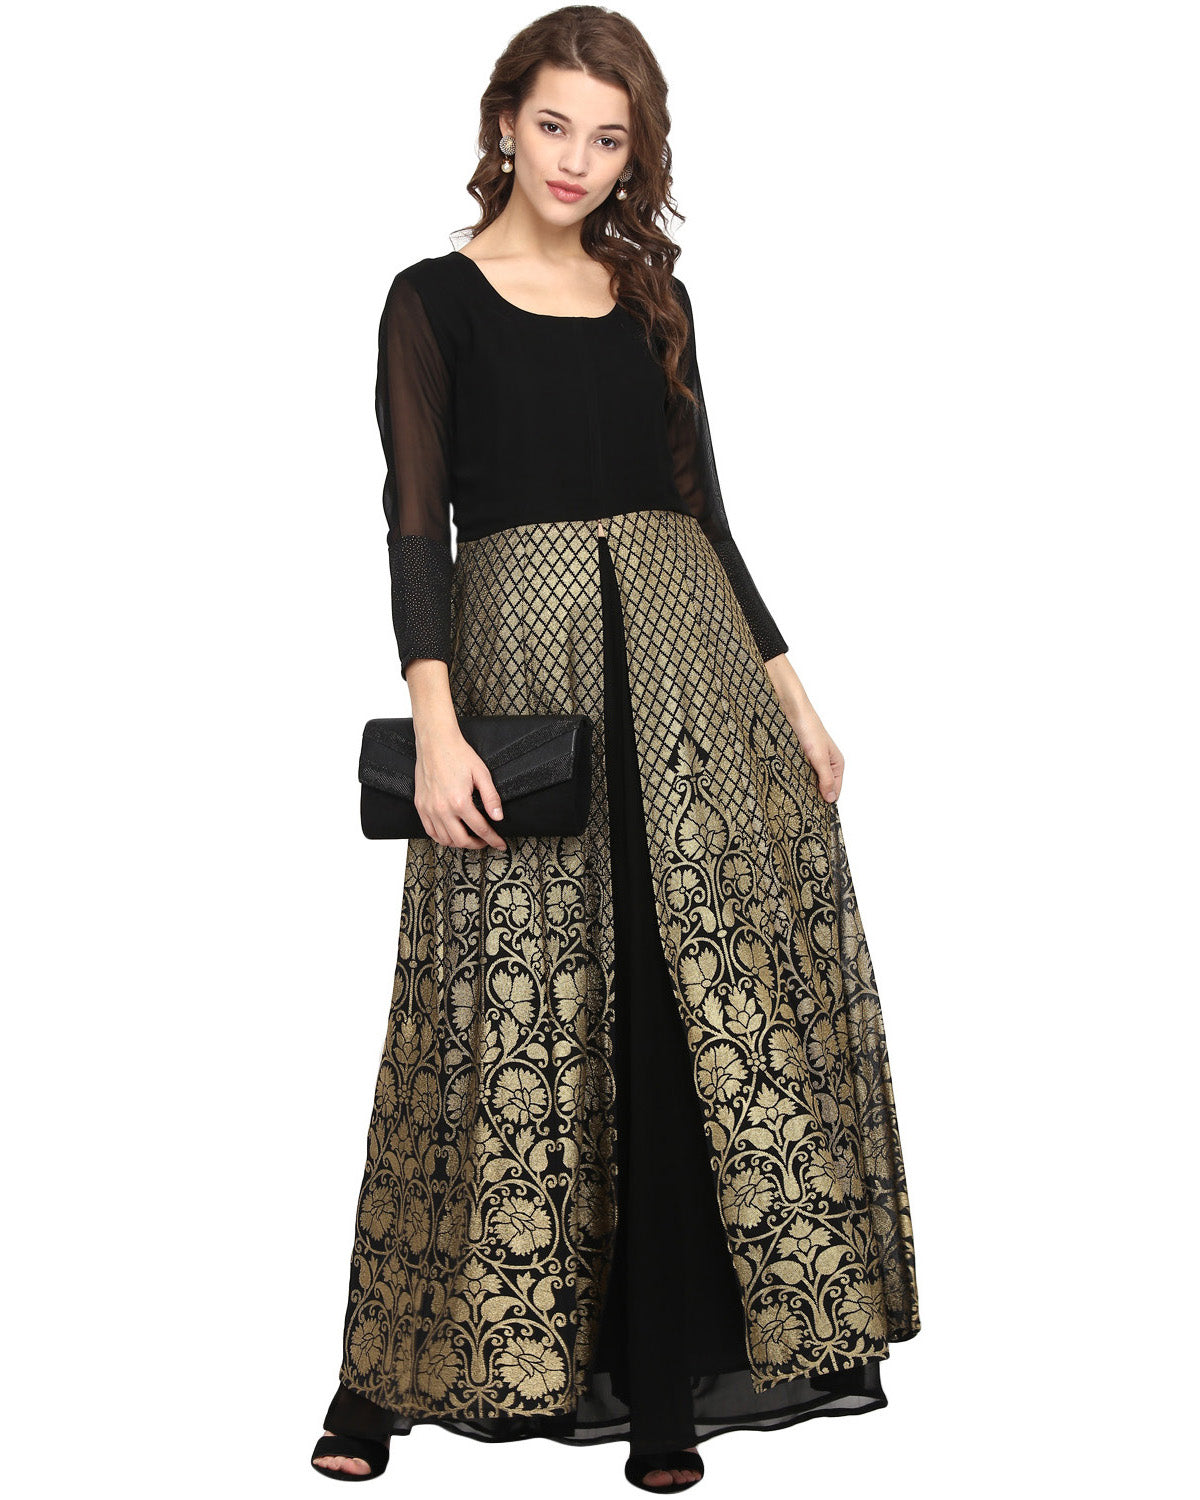 Women's Black Georgette Gold Print Dress - Ahalyaa